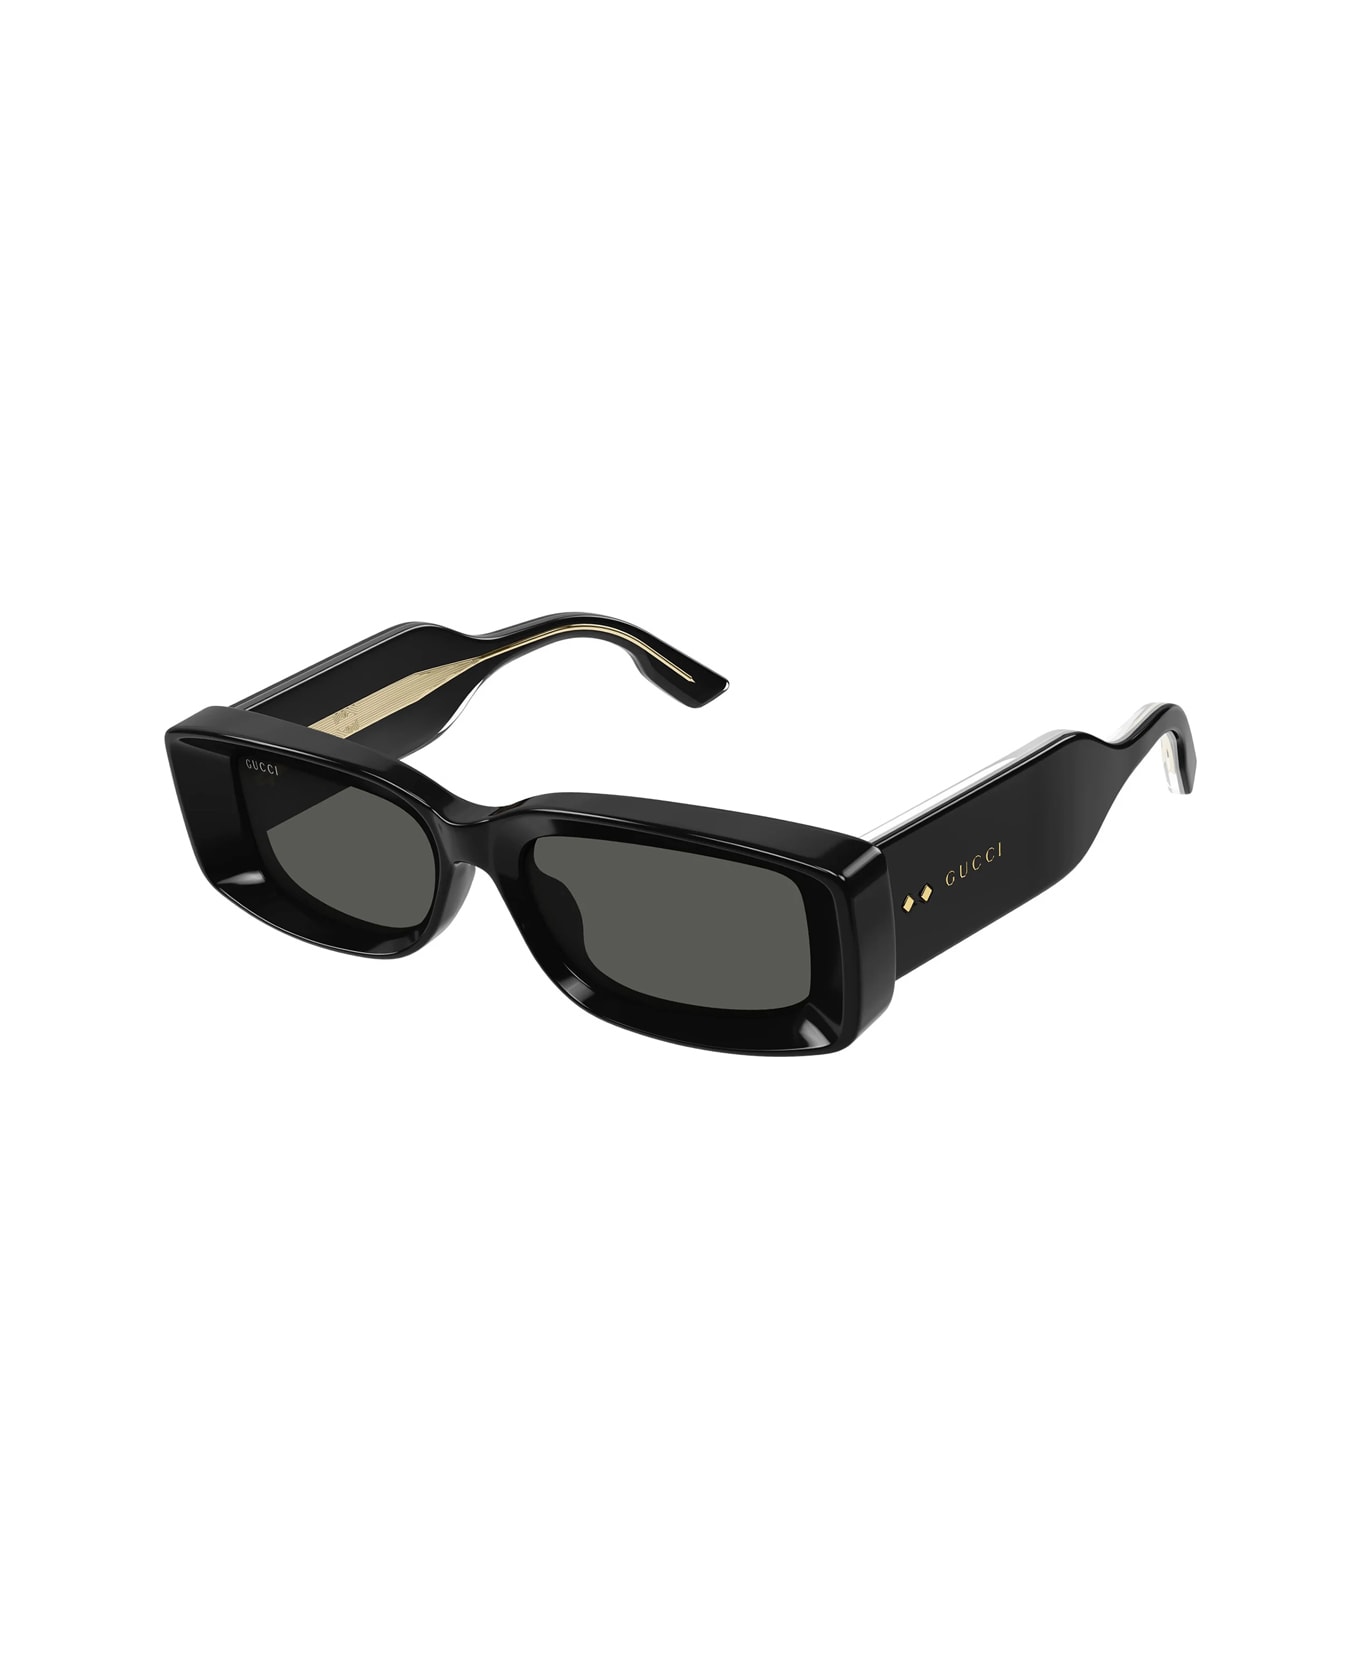 Gucci Eyewear Gg1528s 001 Sunglasses - Nero